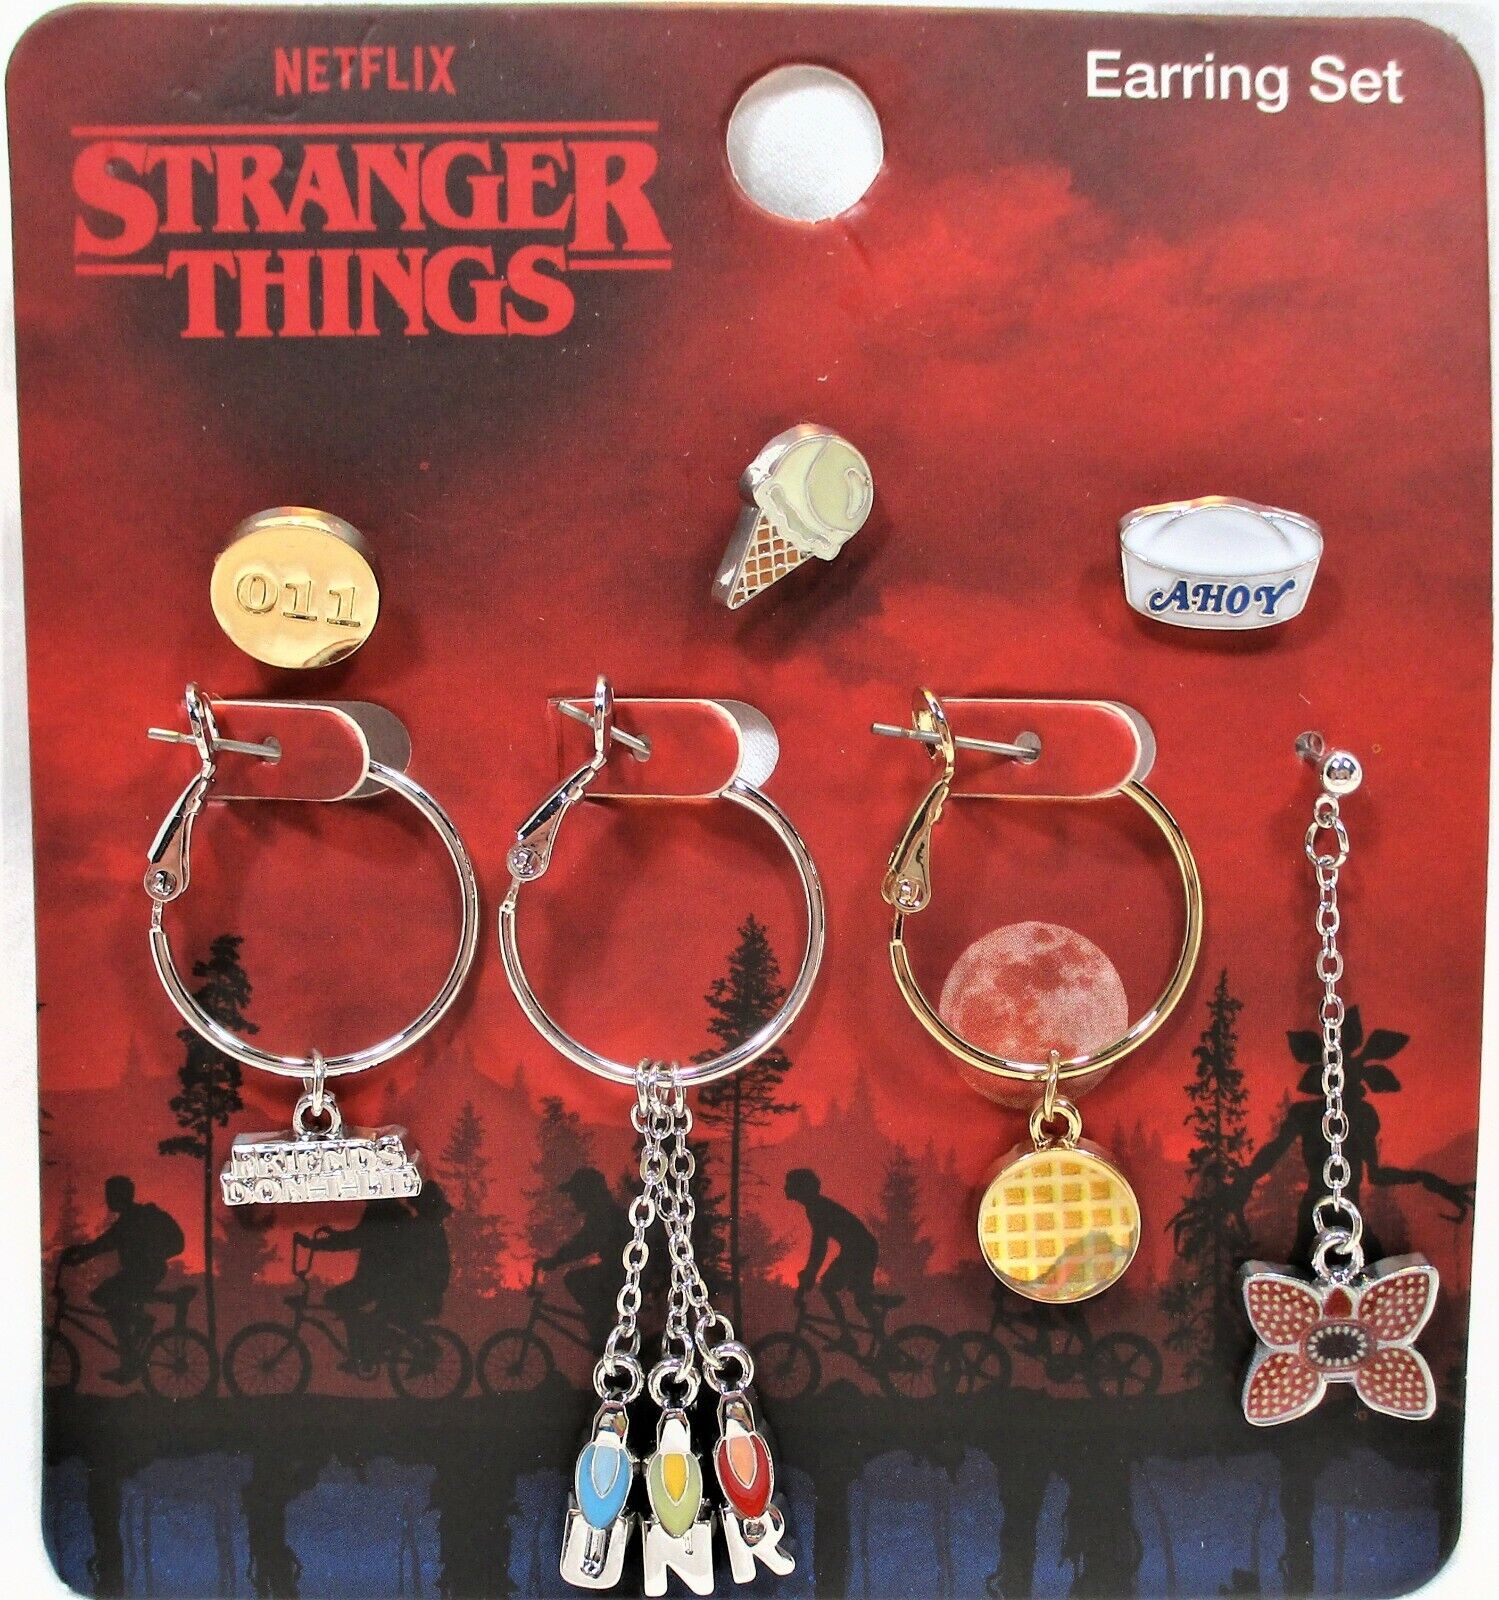 Stranger Things Earring Set Netflix Loungefly Mismatched Set Of 7 Earrings Nip